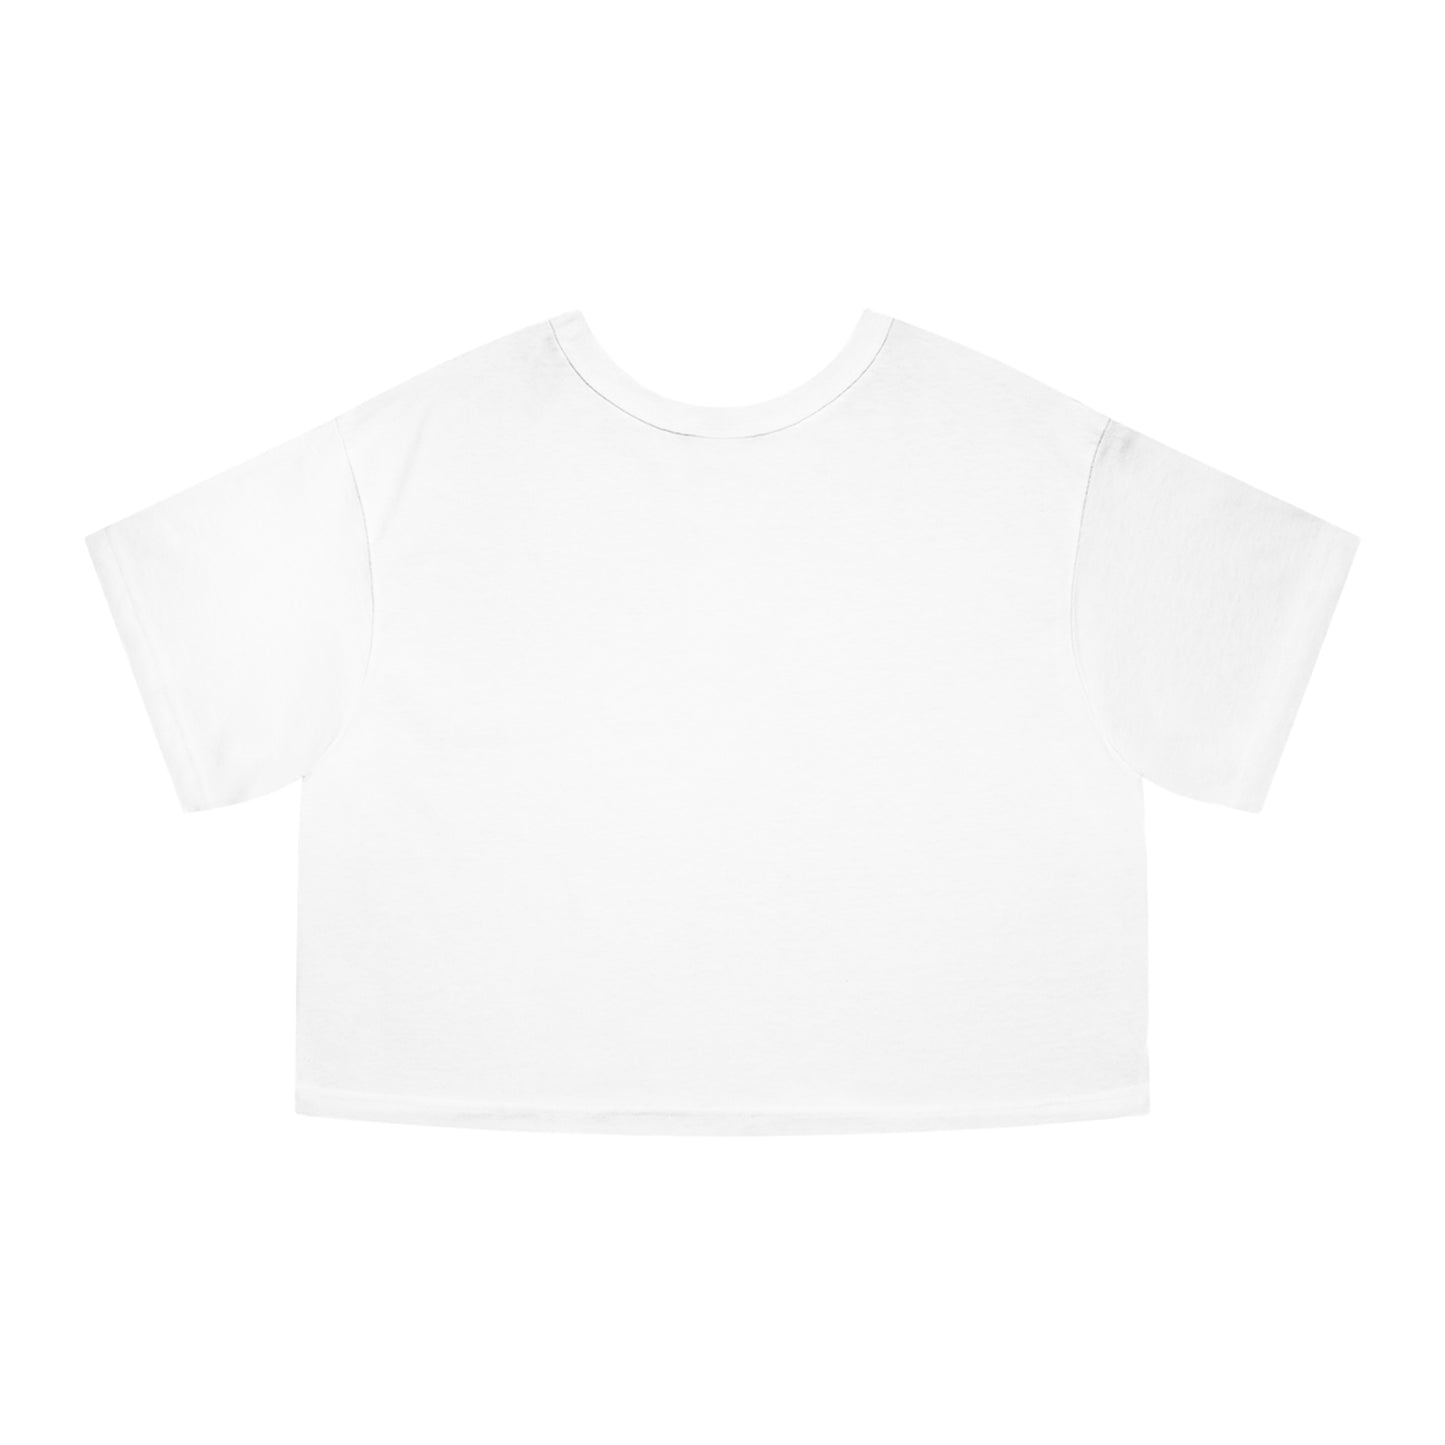 Starstuff | Champion Women's Heritage Cropped T-Shirt